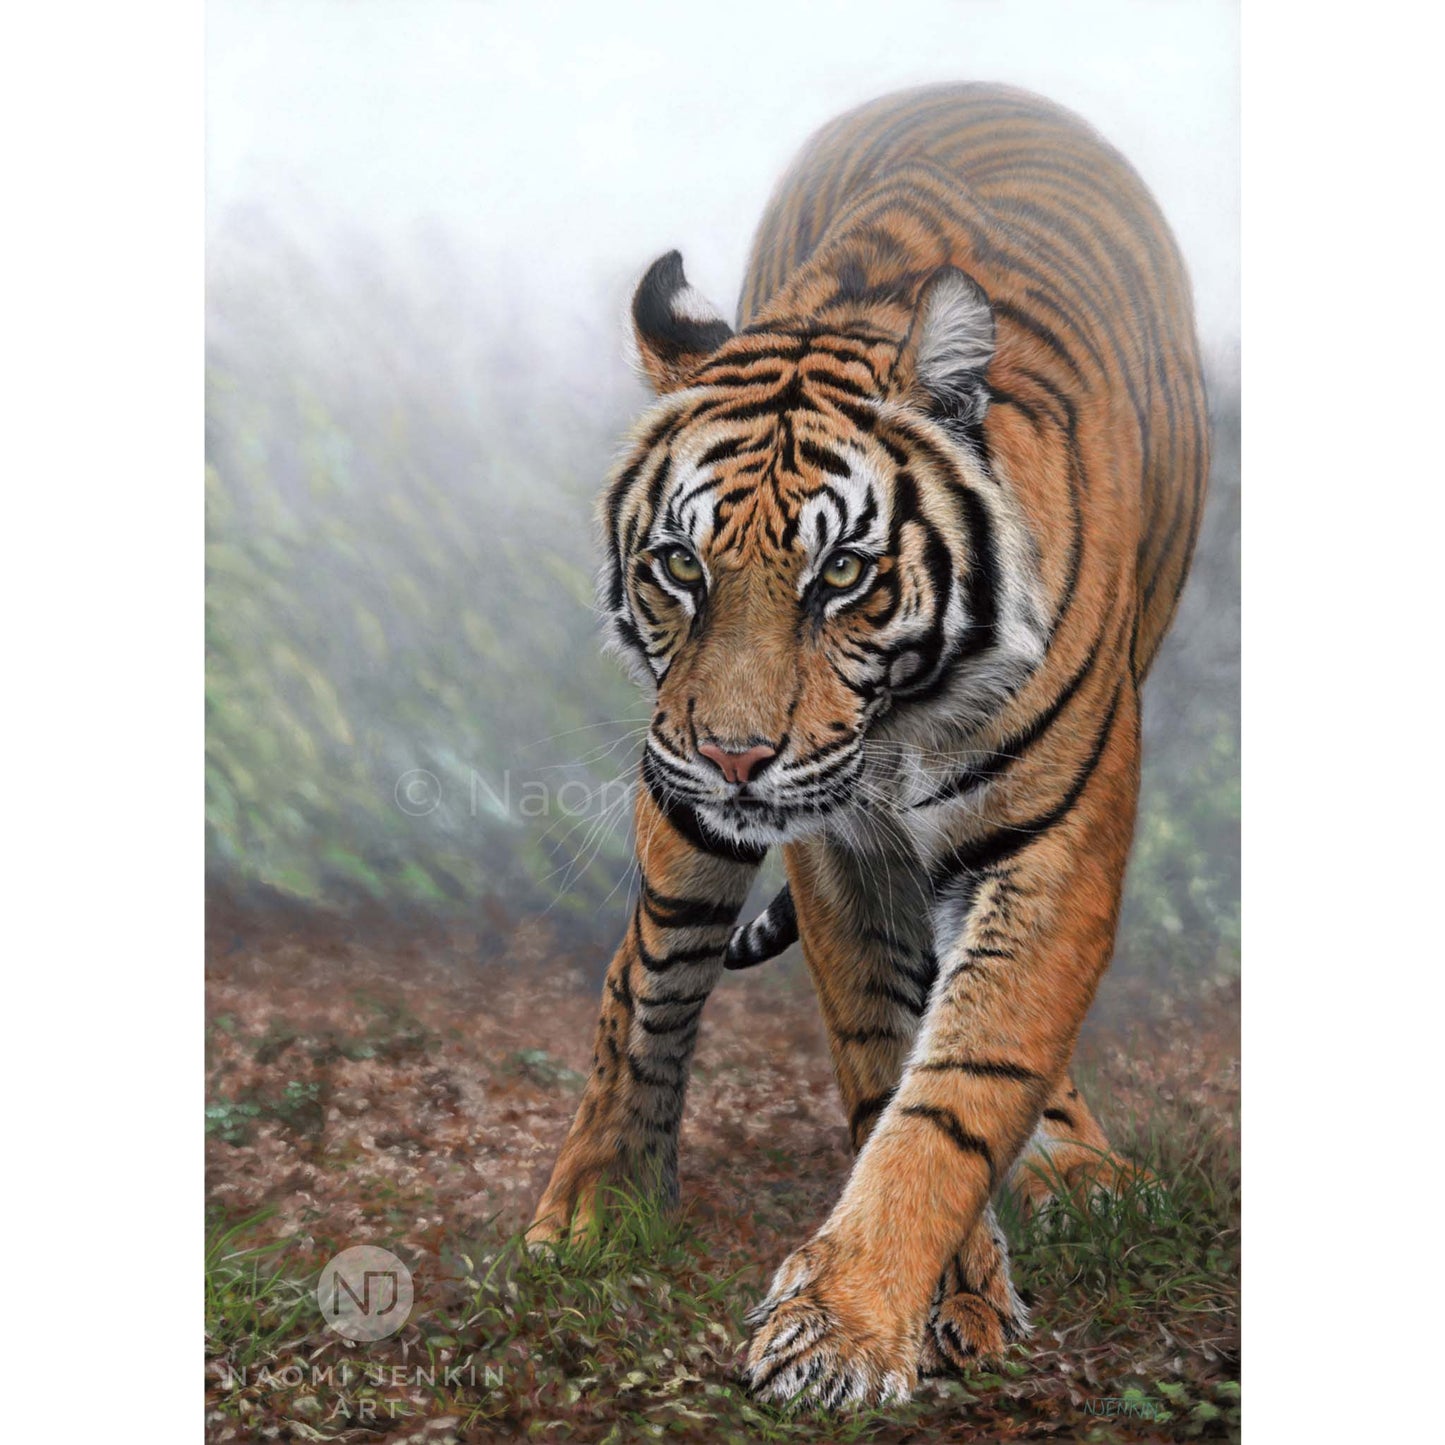 Original tiger painting "Stealth" by wildlife artist Naomi Jenkin Art.